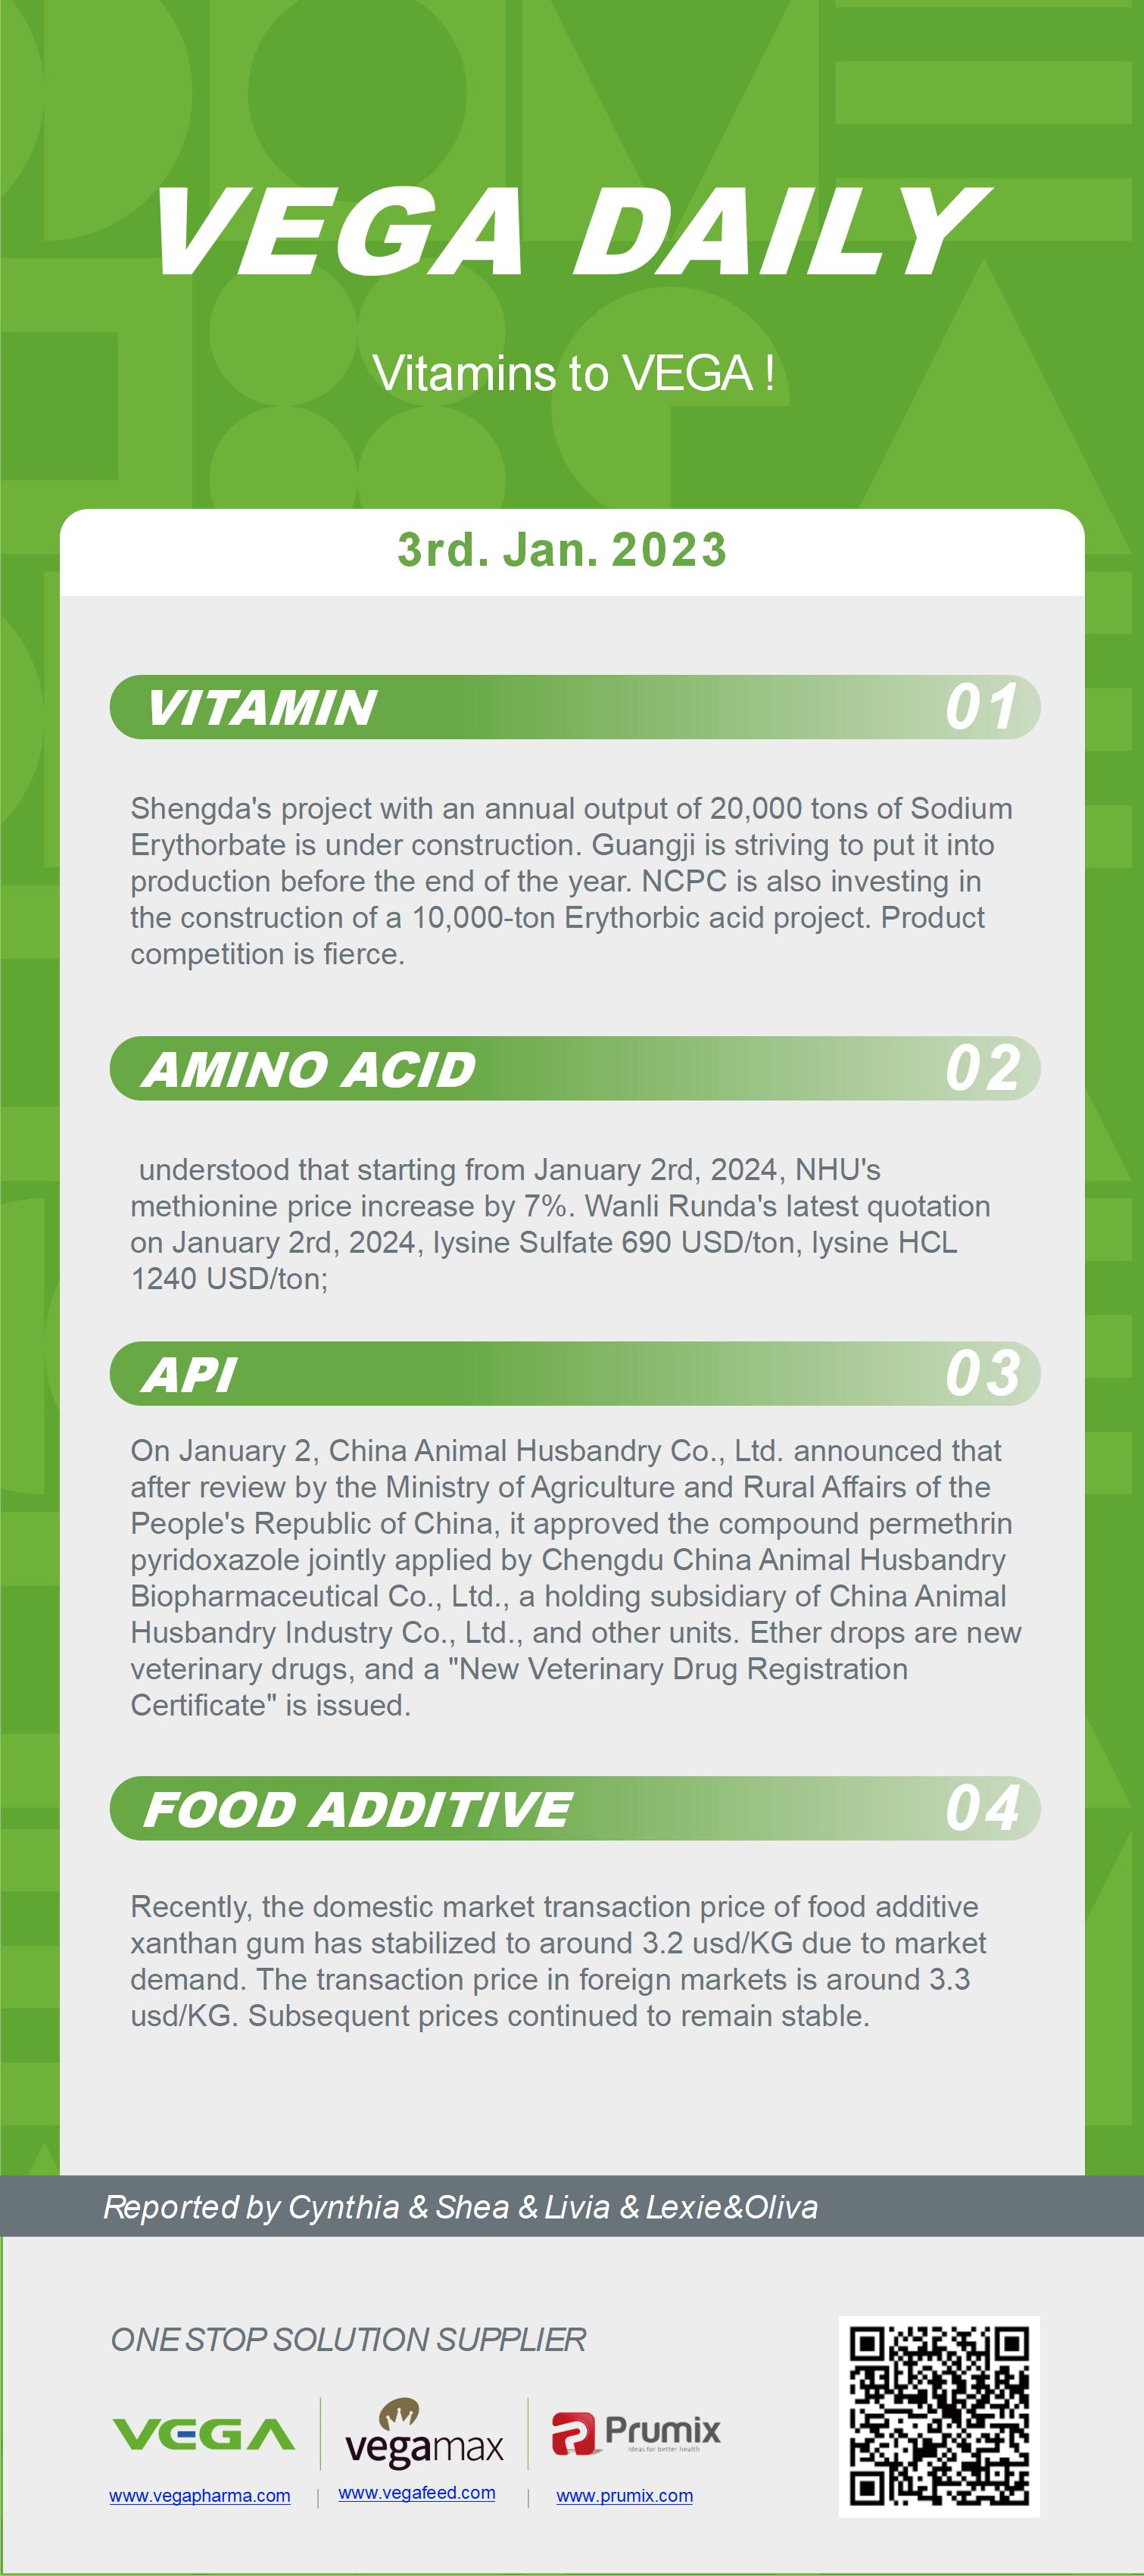 Vega Daily Dated on Jan 3rd 2024 Vitamin Amino Acid APl Food Additives.jpg